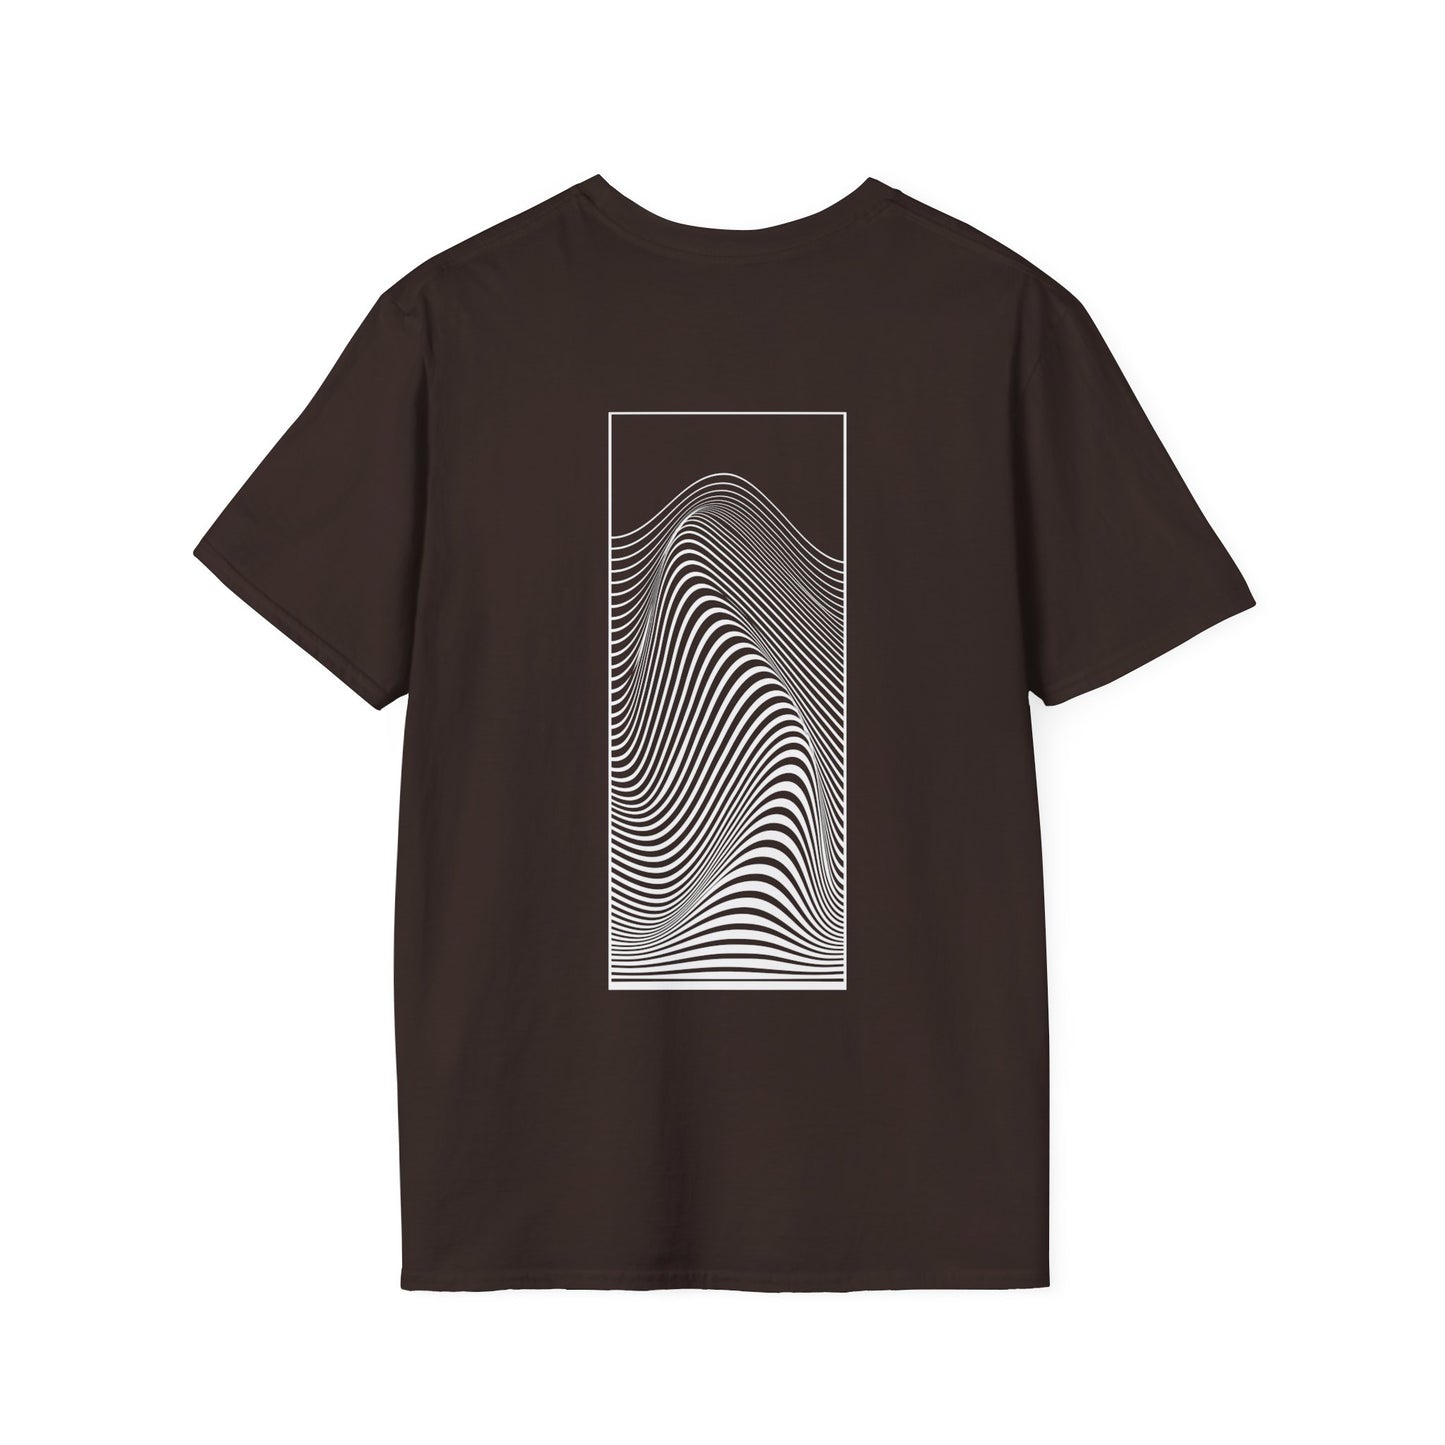 Mesmerizing Black and White Swirl Illusion T-Shirt | Unique Apparel